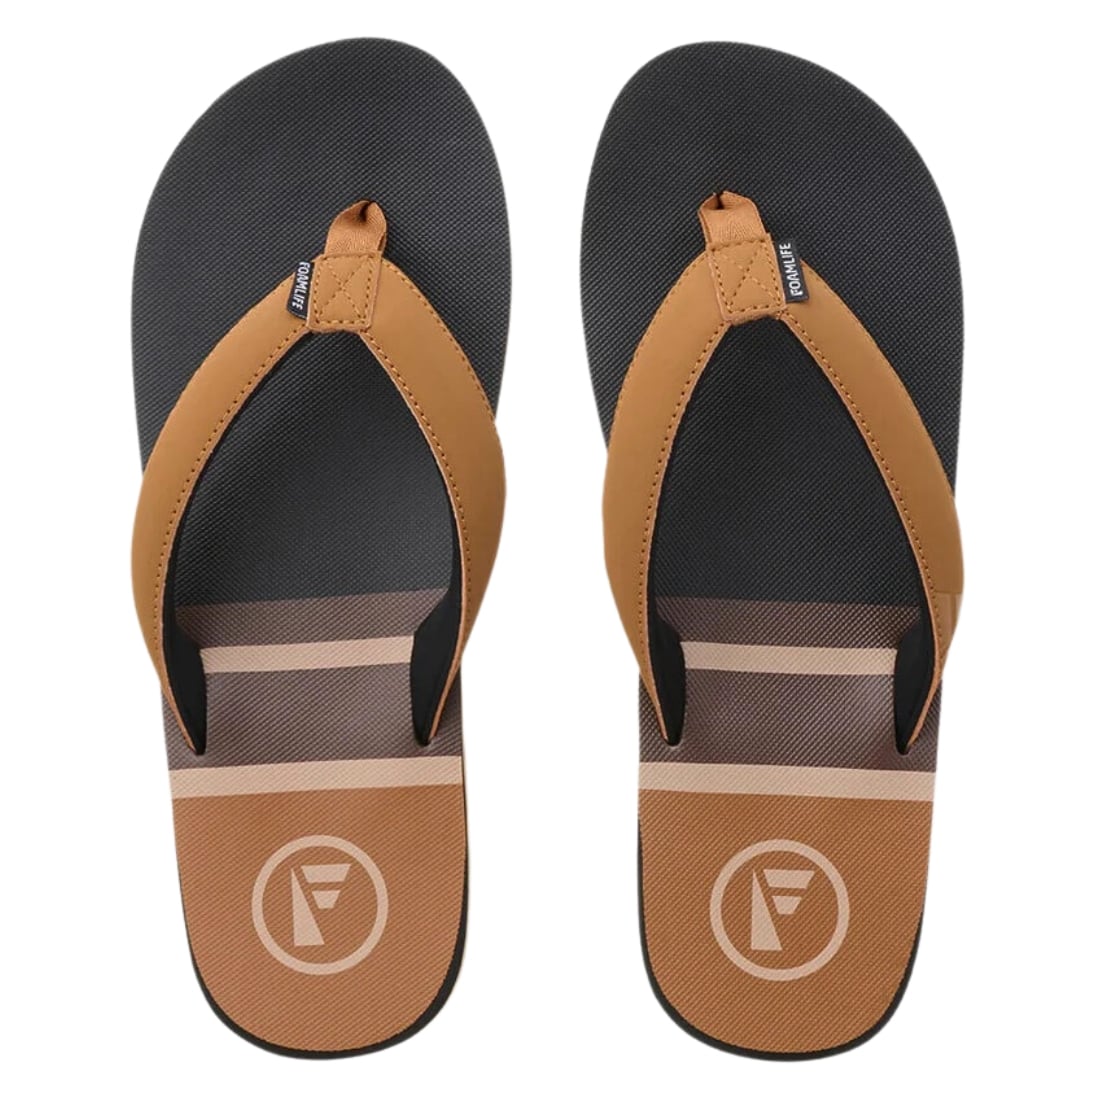 Foamlife Rullen SC Flip Flop Sandals - Tan - Mens Flip Flops by FoamLife